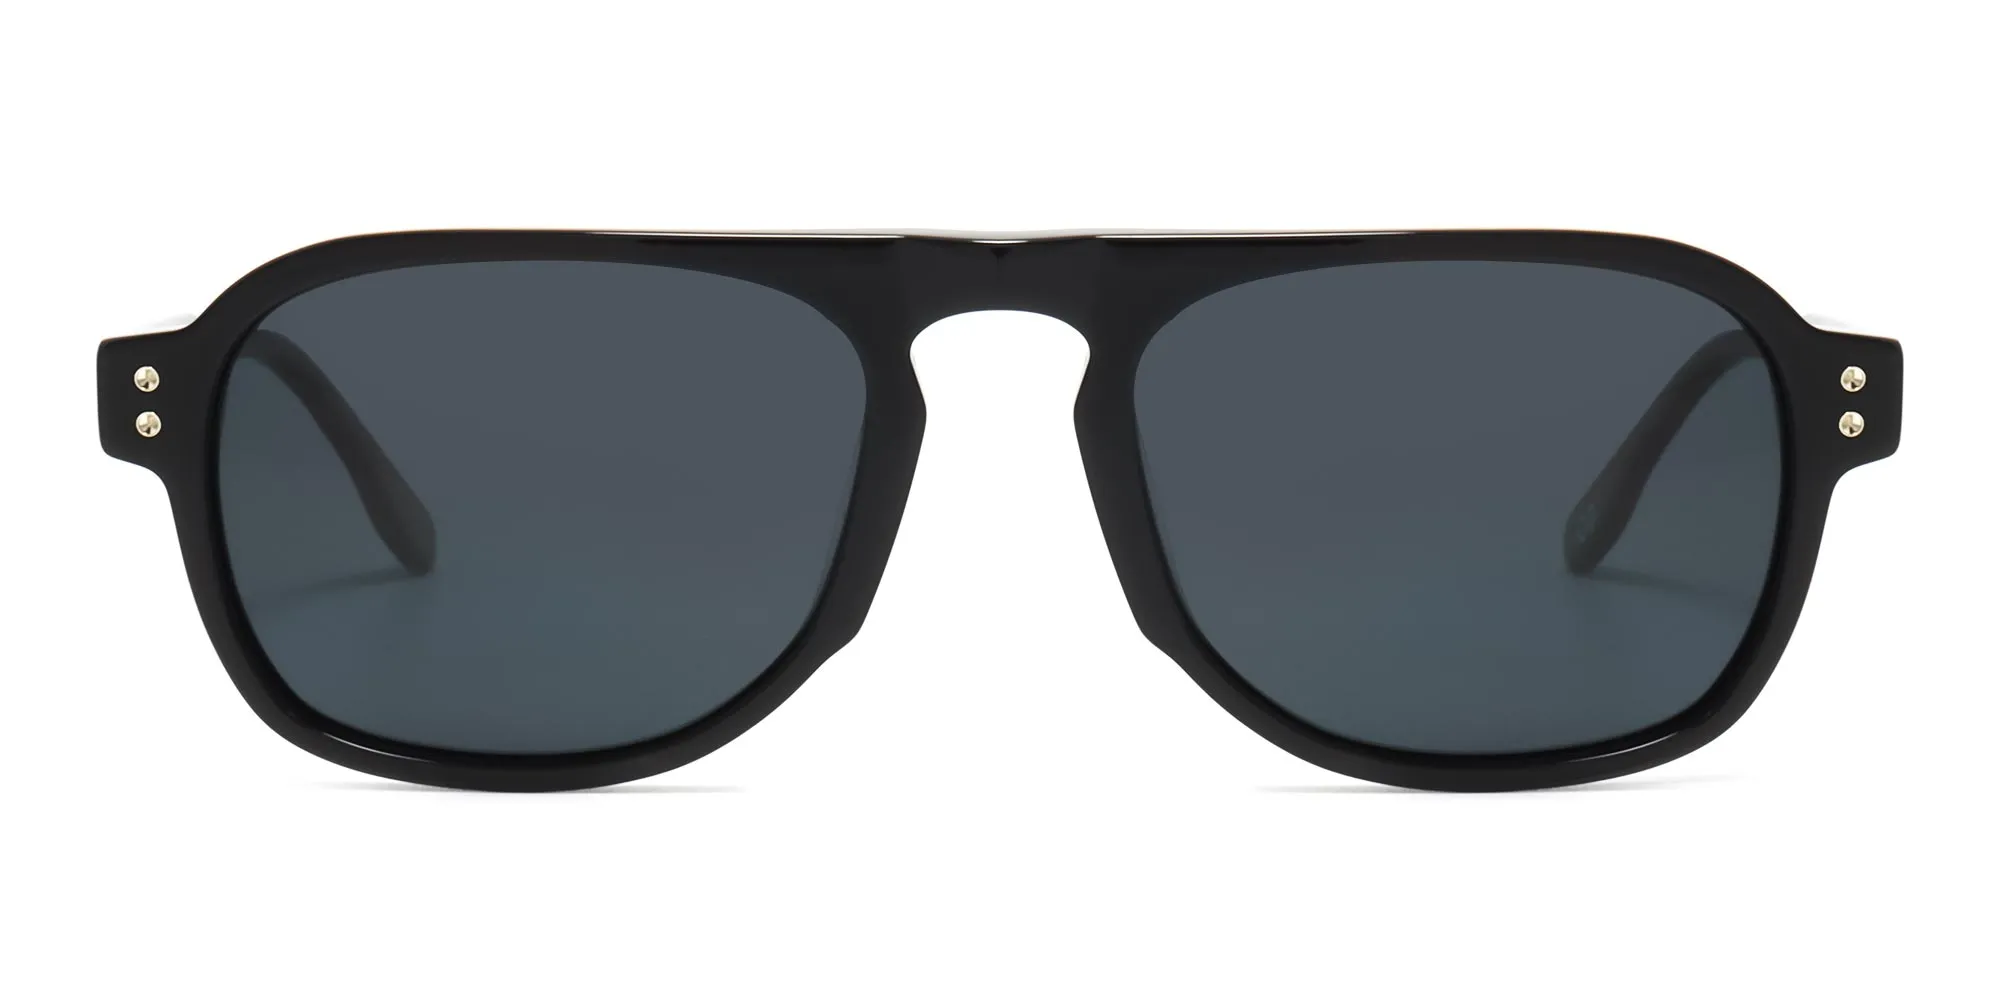 Black Pilot sunglasses